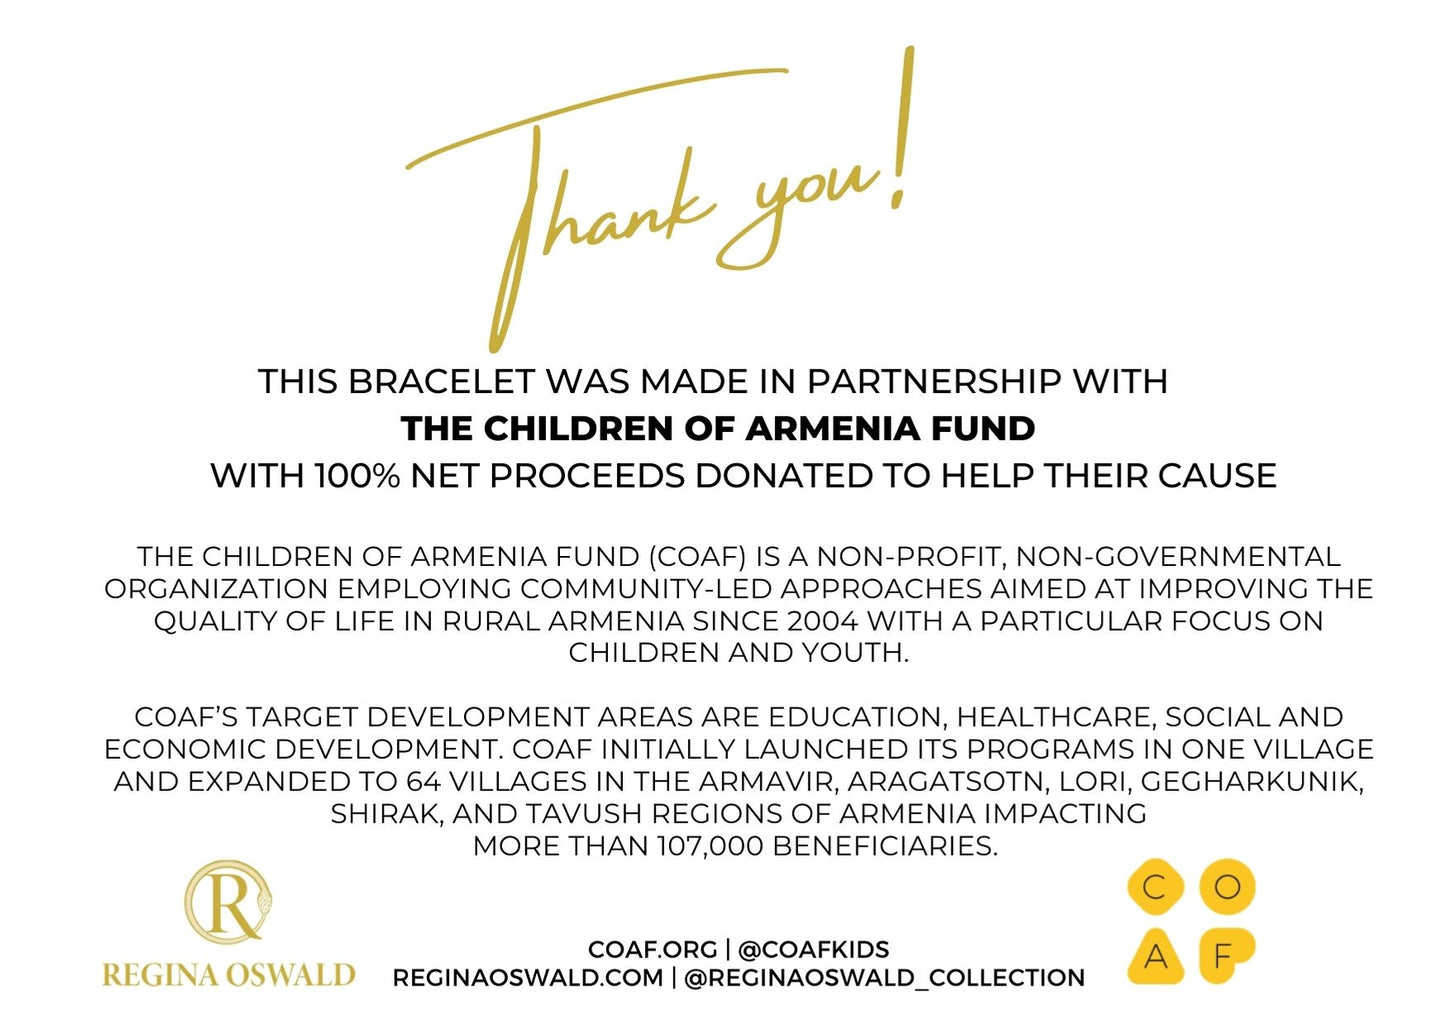 Garnet Bracelet With Silver Coin Charm / Benefits The Children Of Armenia Fund